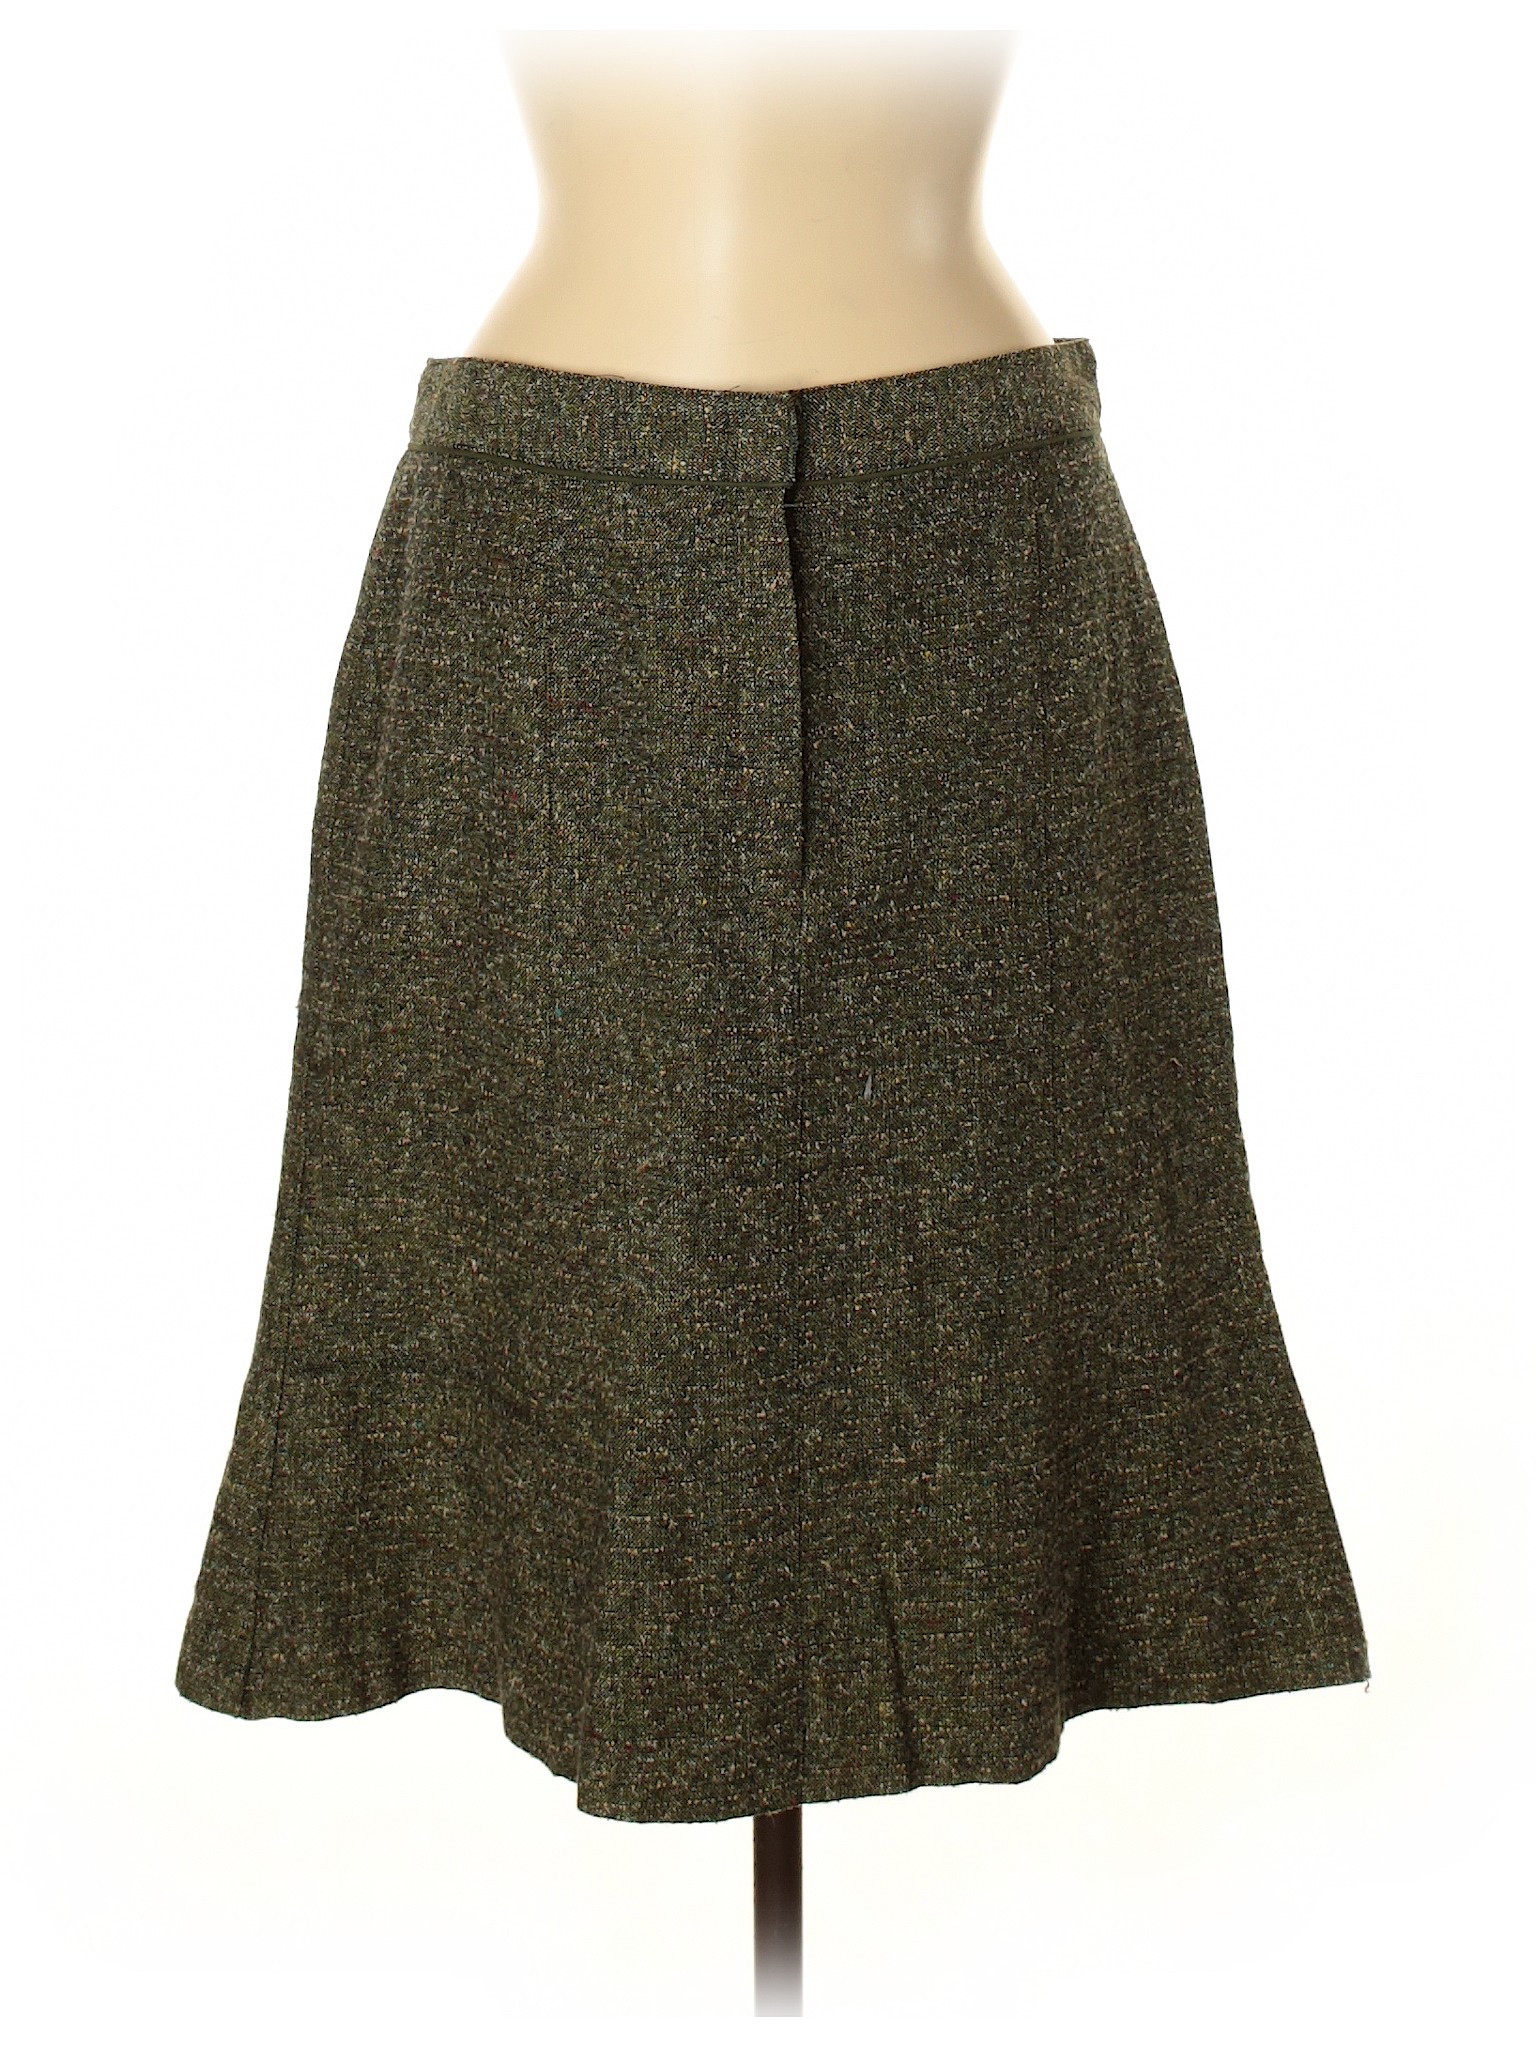 Apt. 9 Women Green Casual Skirt 8 | eBay